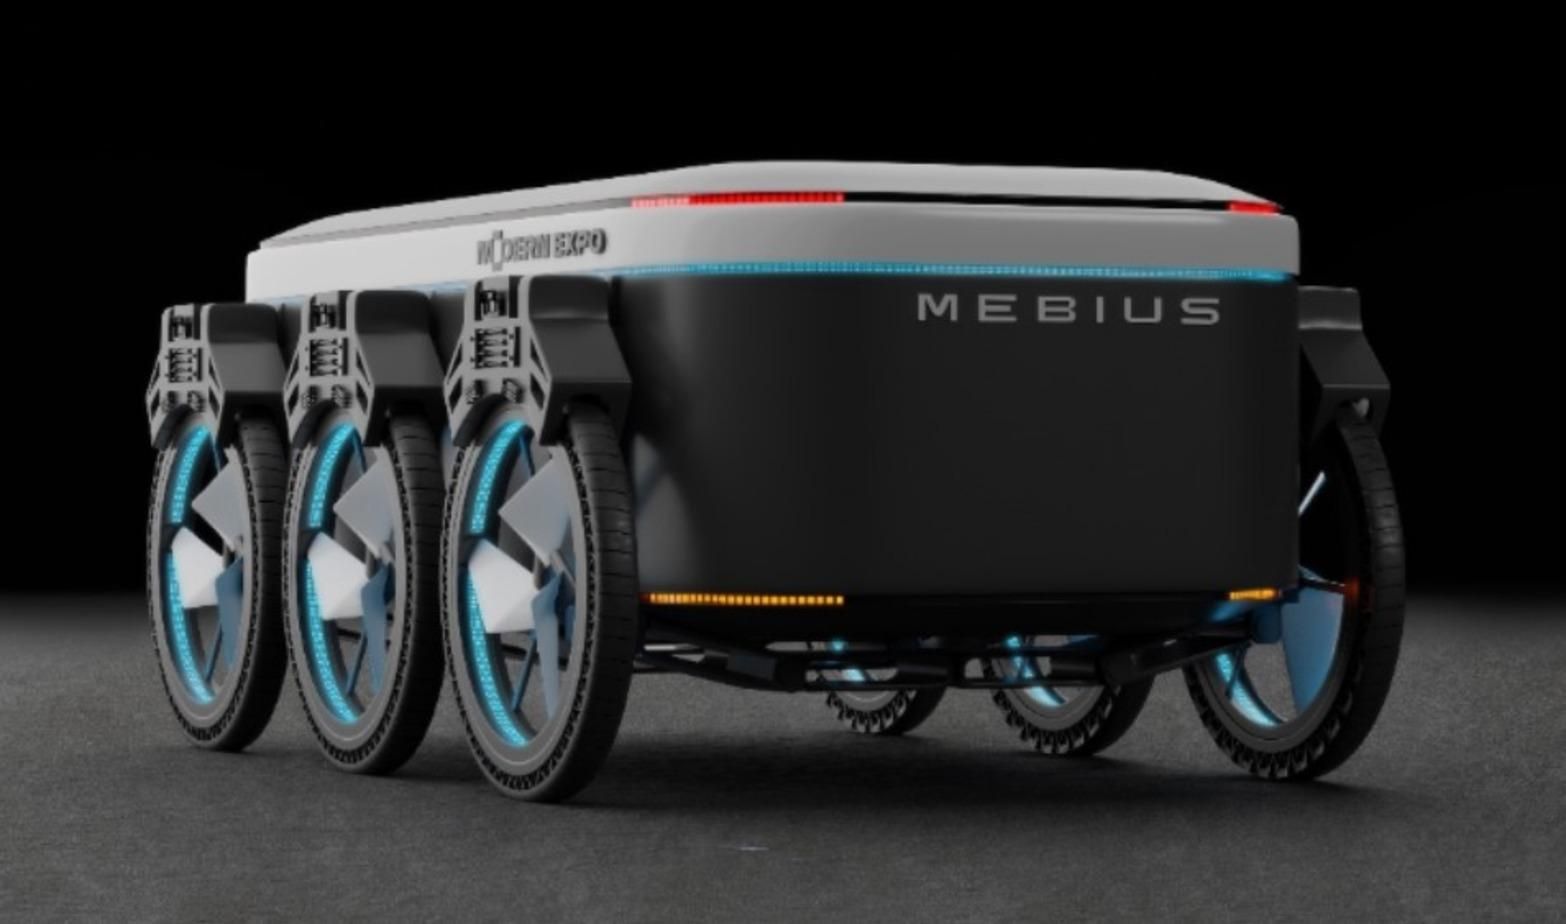 Украинцы представили концепт робота-курьера Mebius: видео